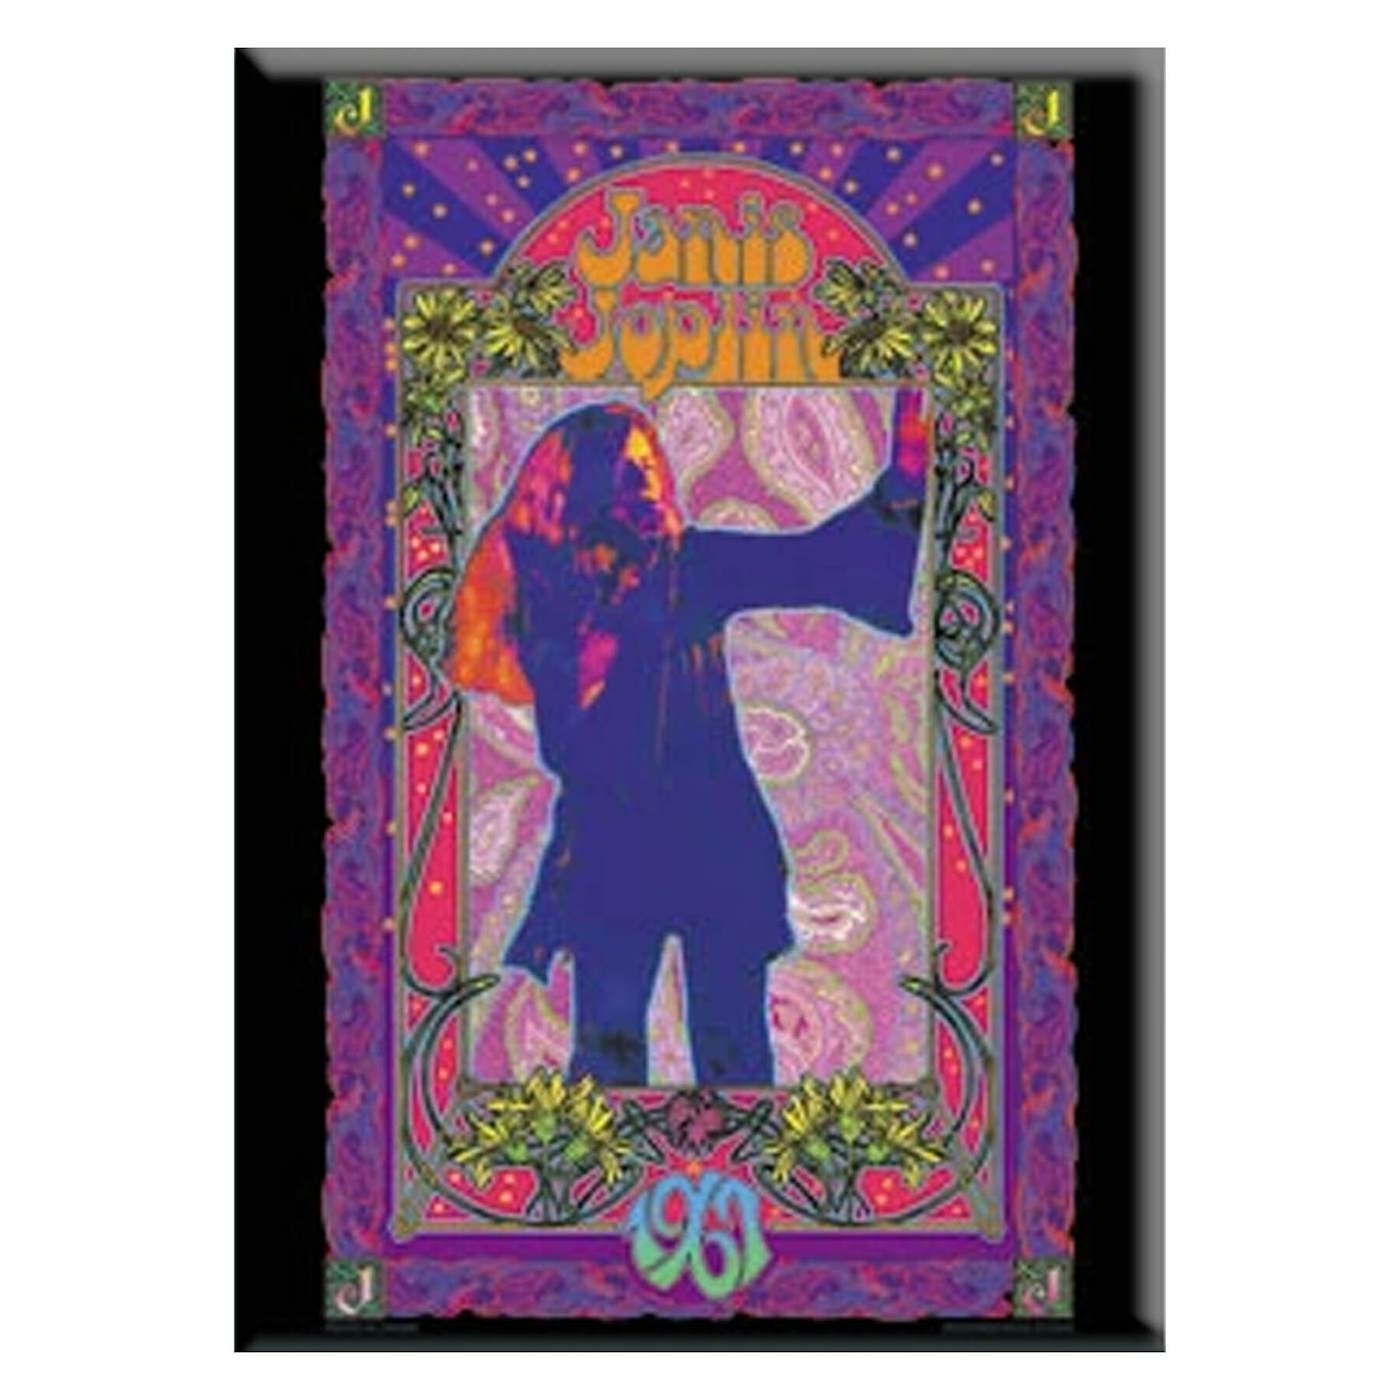 Janis Joplin Poster 2.5"x3.5" Magnet